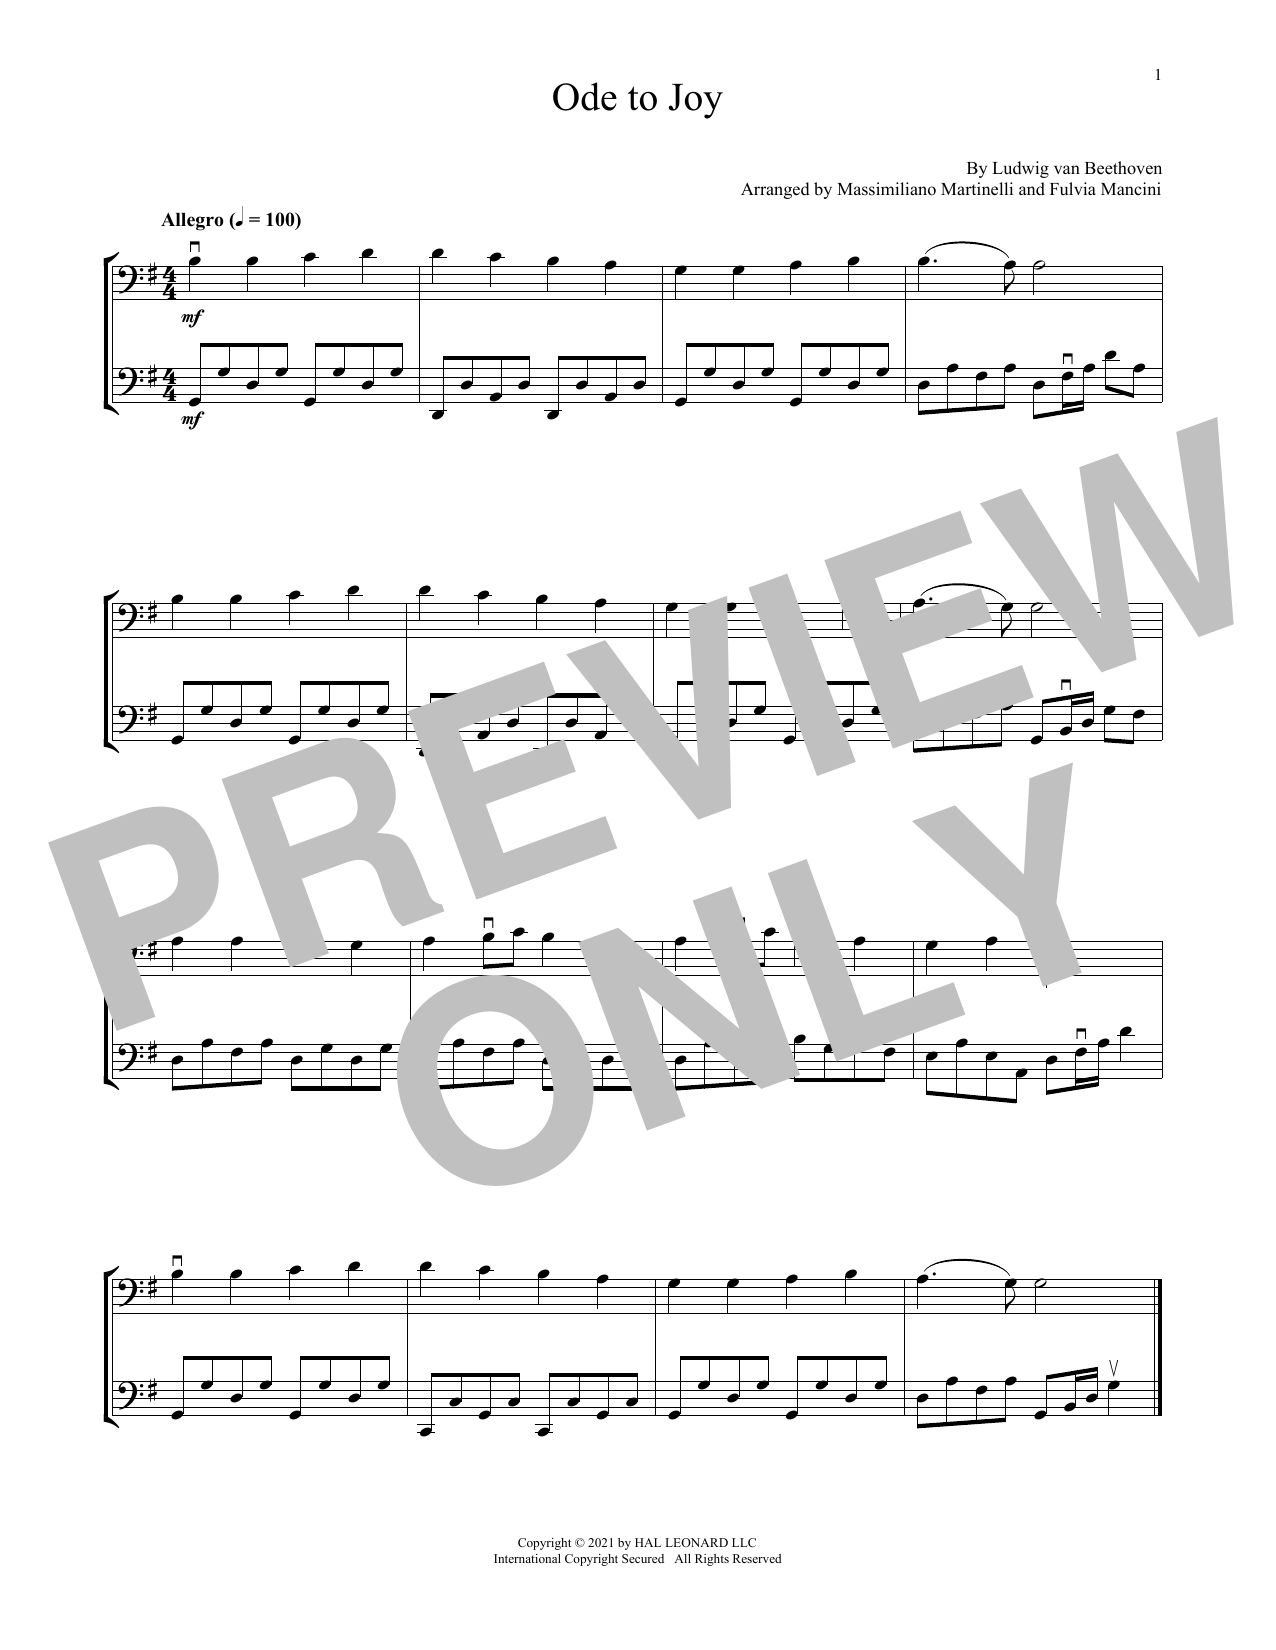 Download Mr & Mrs Cello Ode To Joy Sheet Music